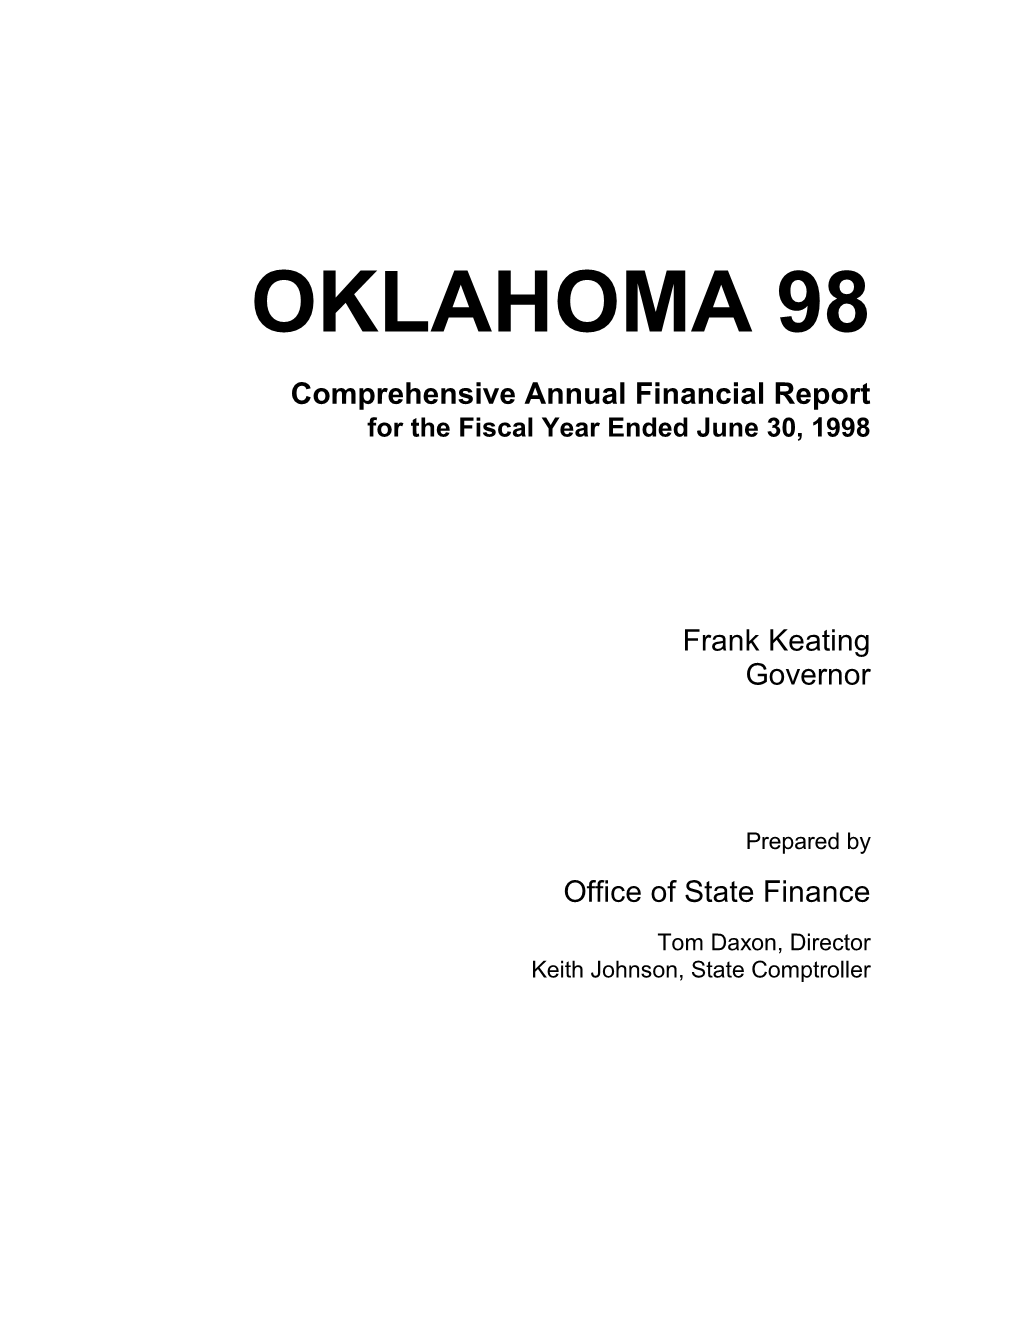 State of Oklahoma Comprehensive